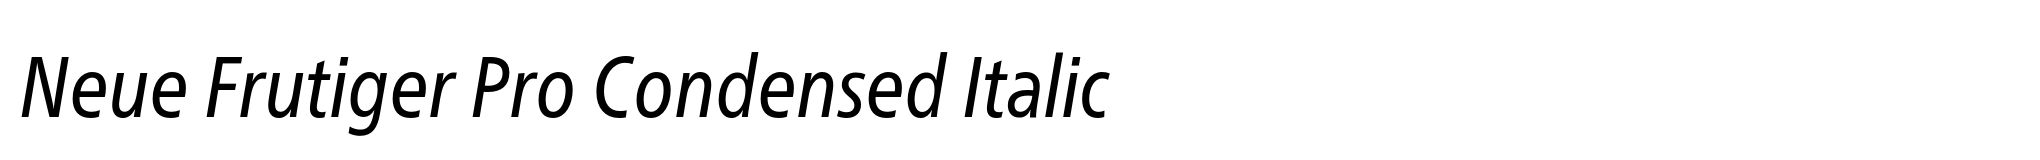 Neue Frutiger Pro Condensed Italic image